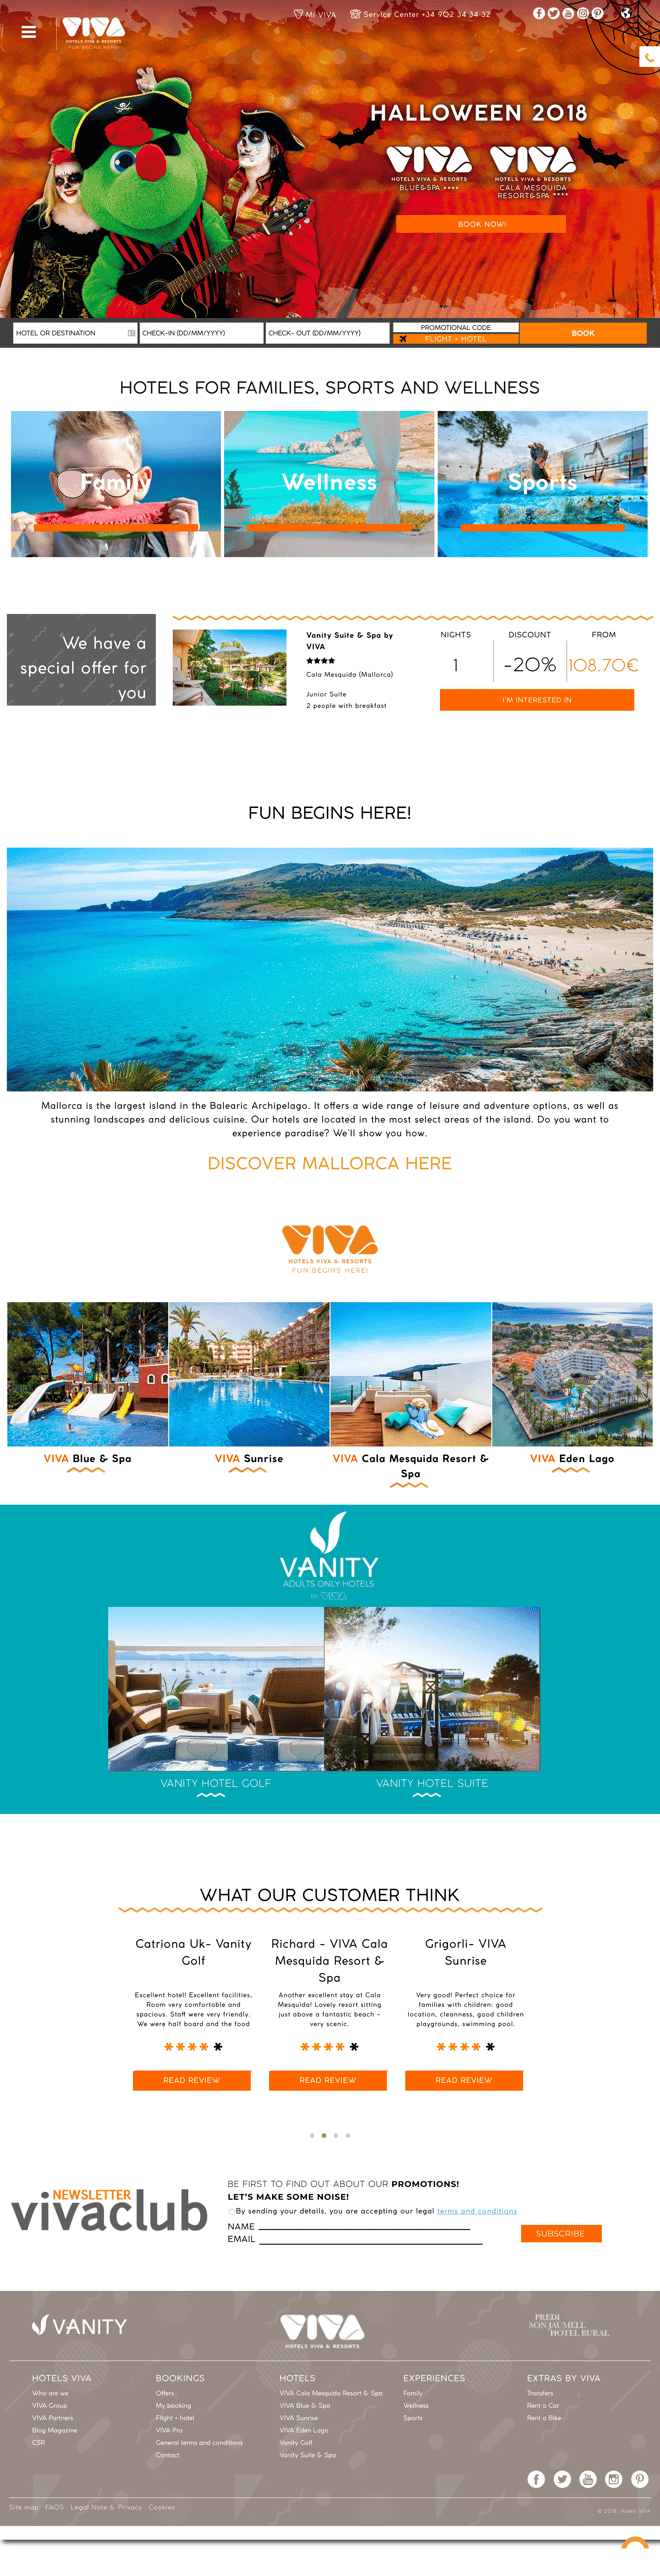 Viva Hotels Homepage